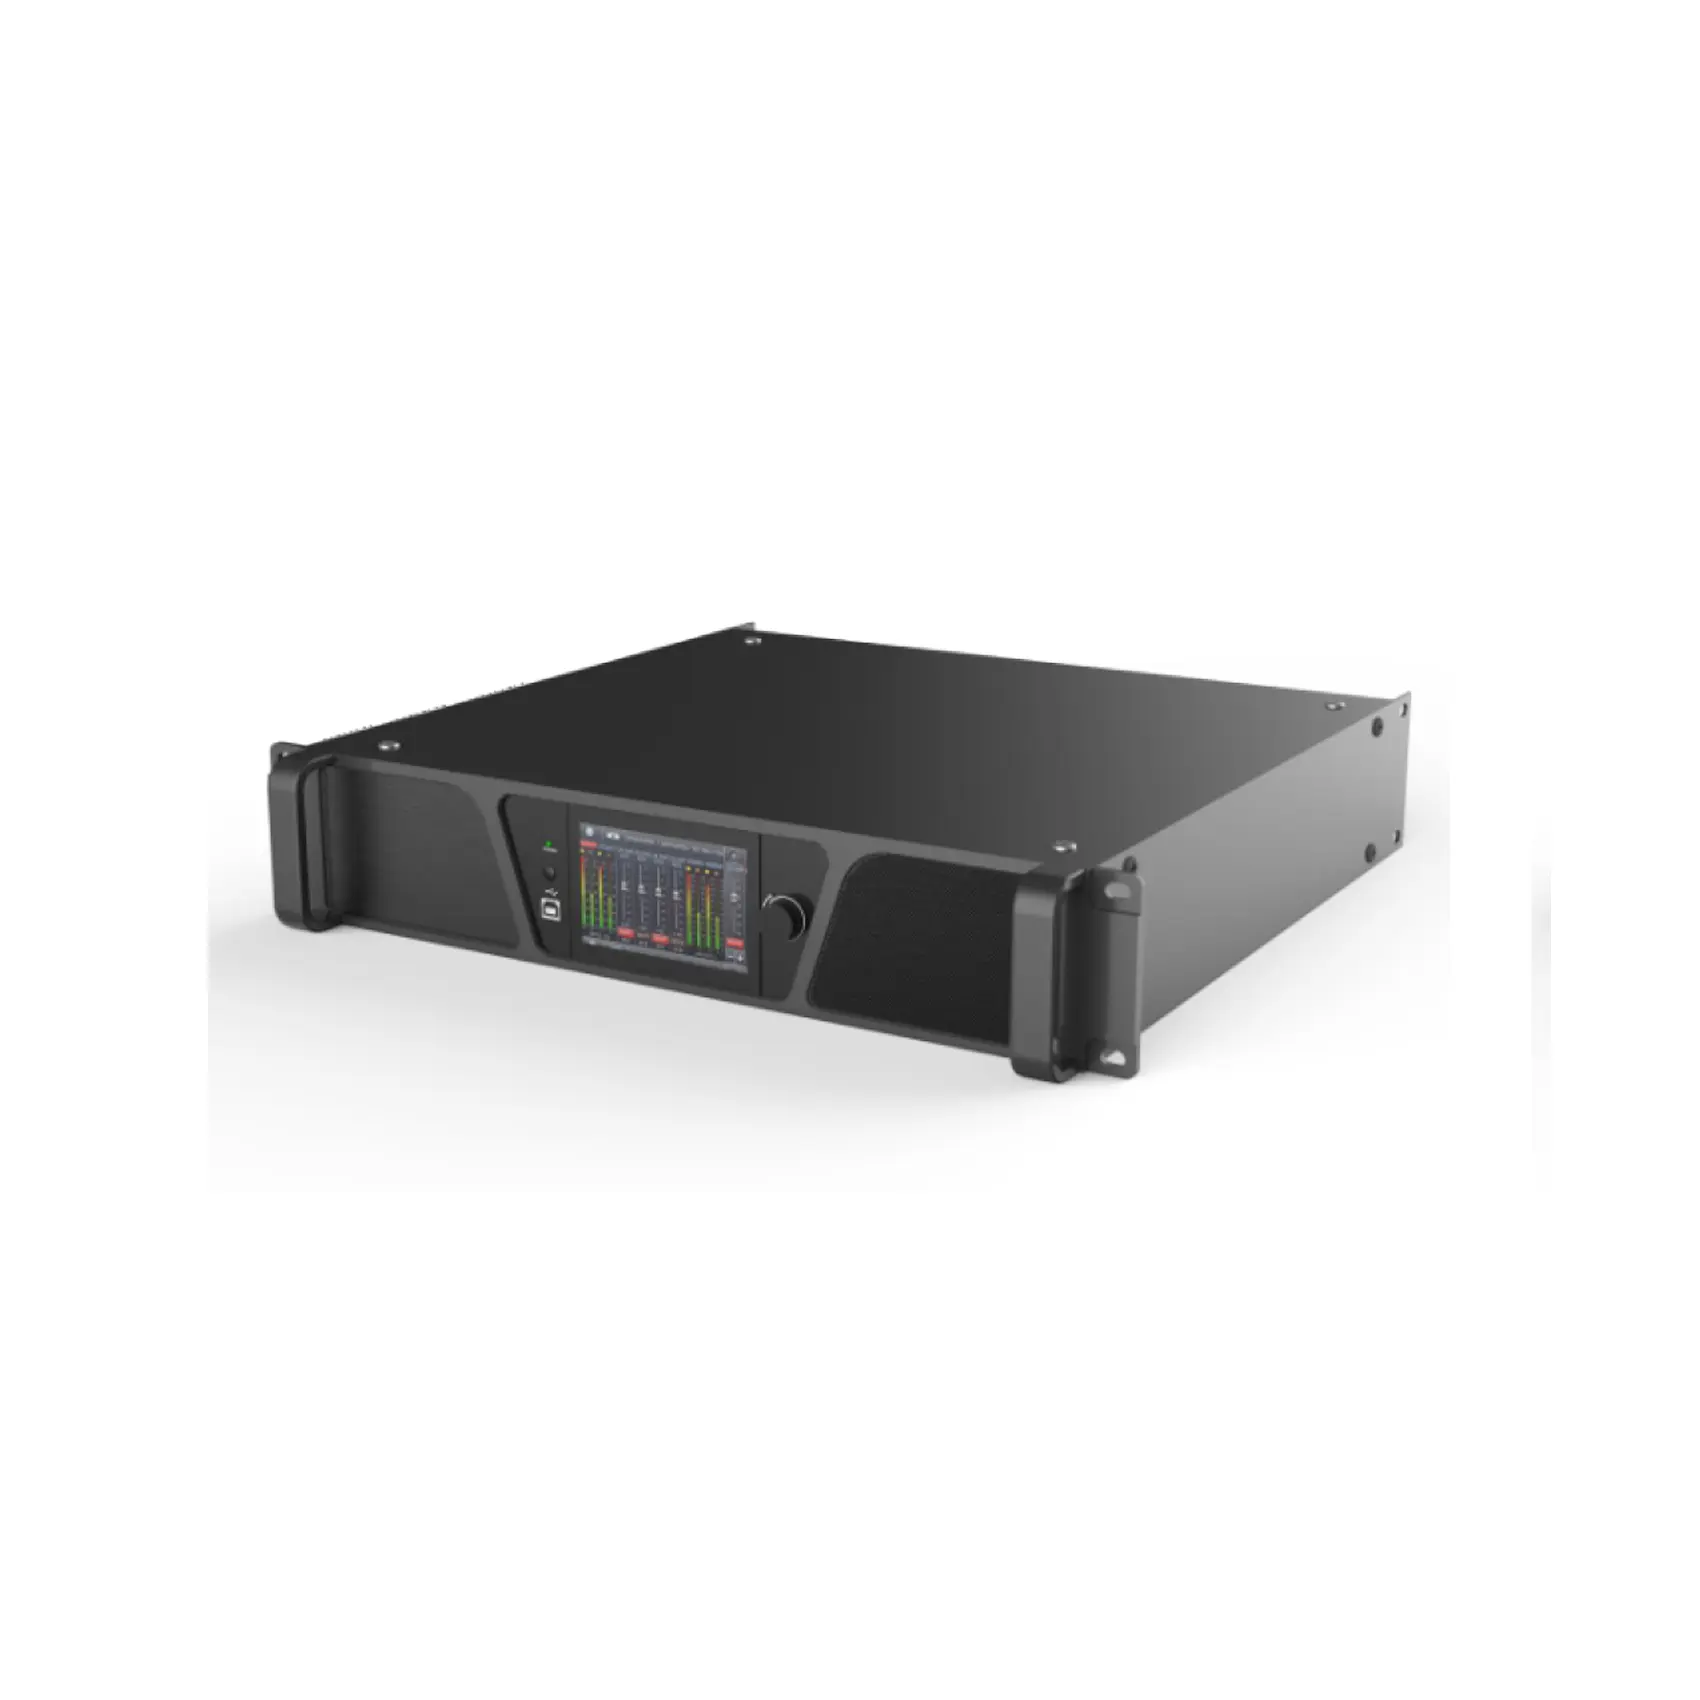 B Hifi 4 Channel Professional Power Digital Class D Audio Mixer Amplifier Big Watt for Subwoofer Speaker